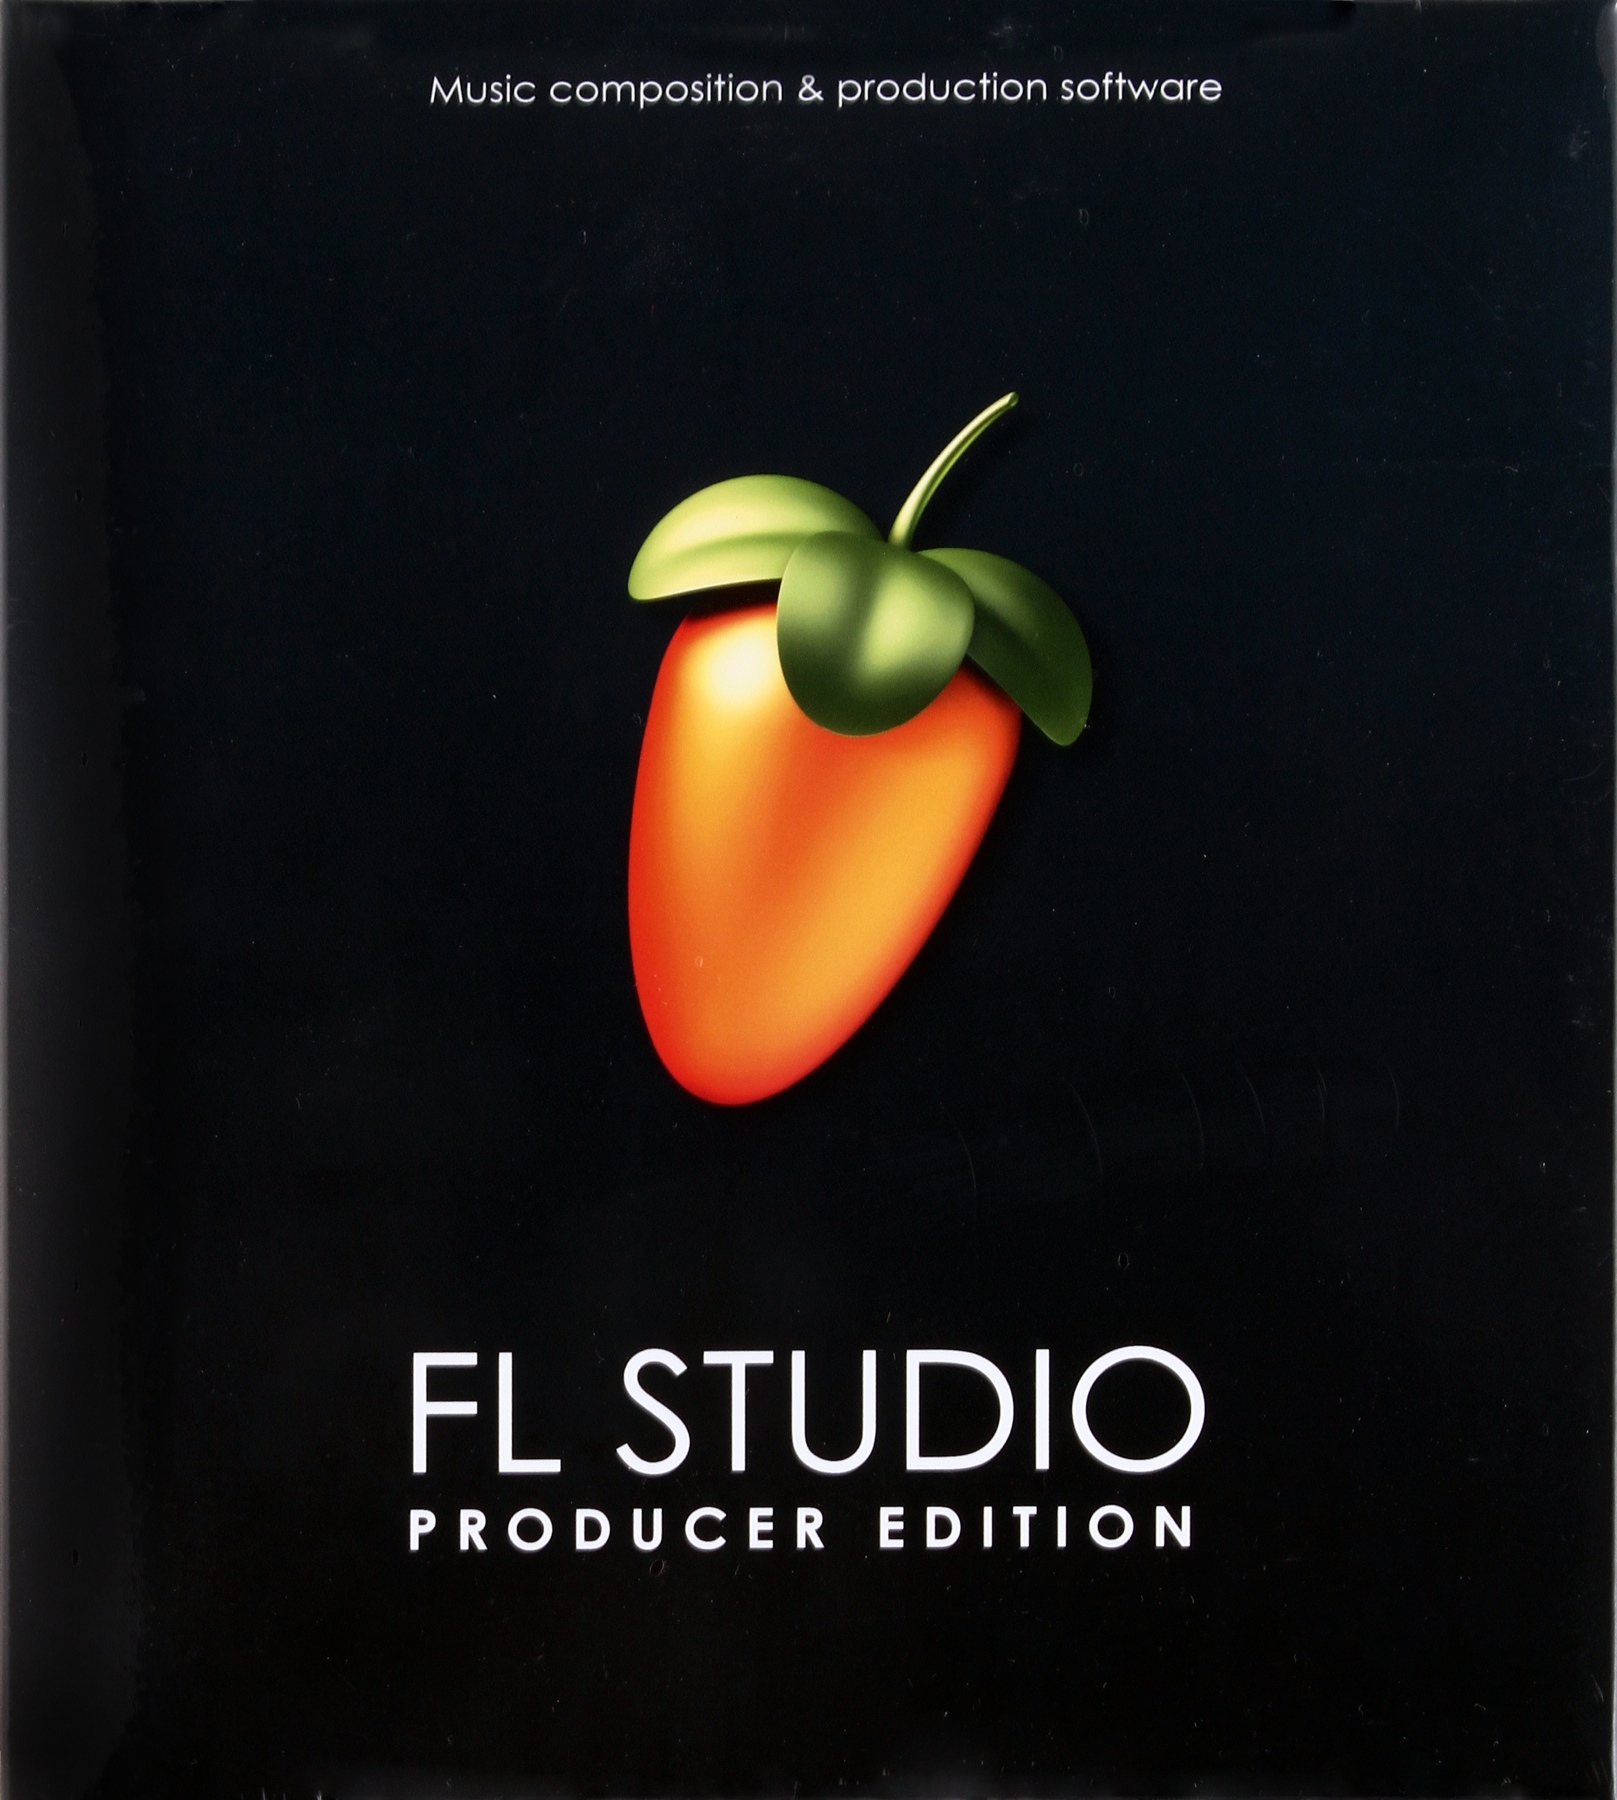 fl studio 10 download full version free mac